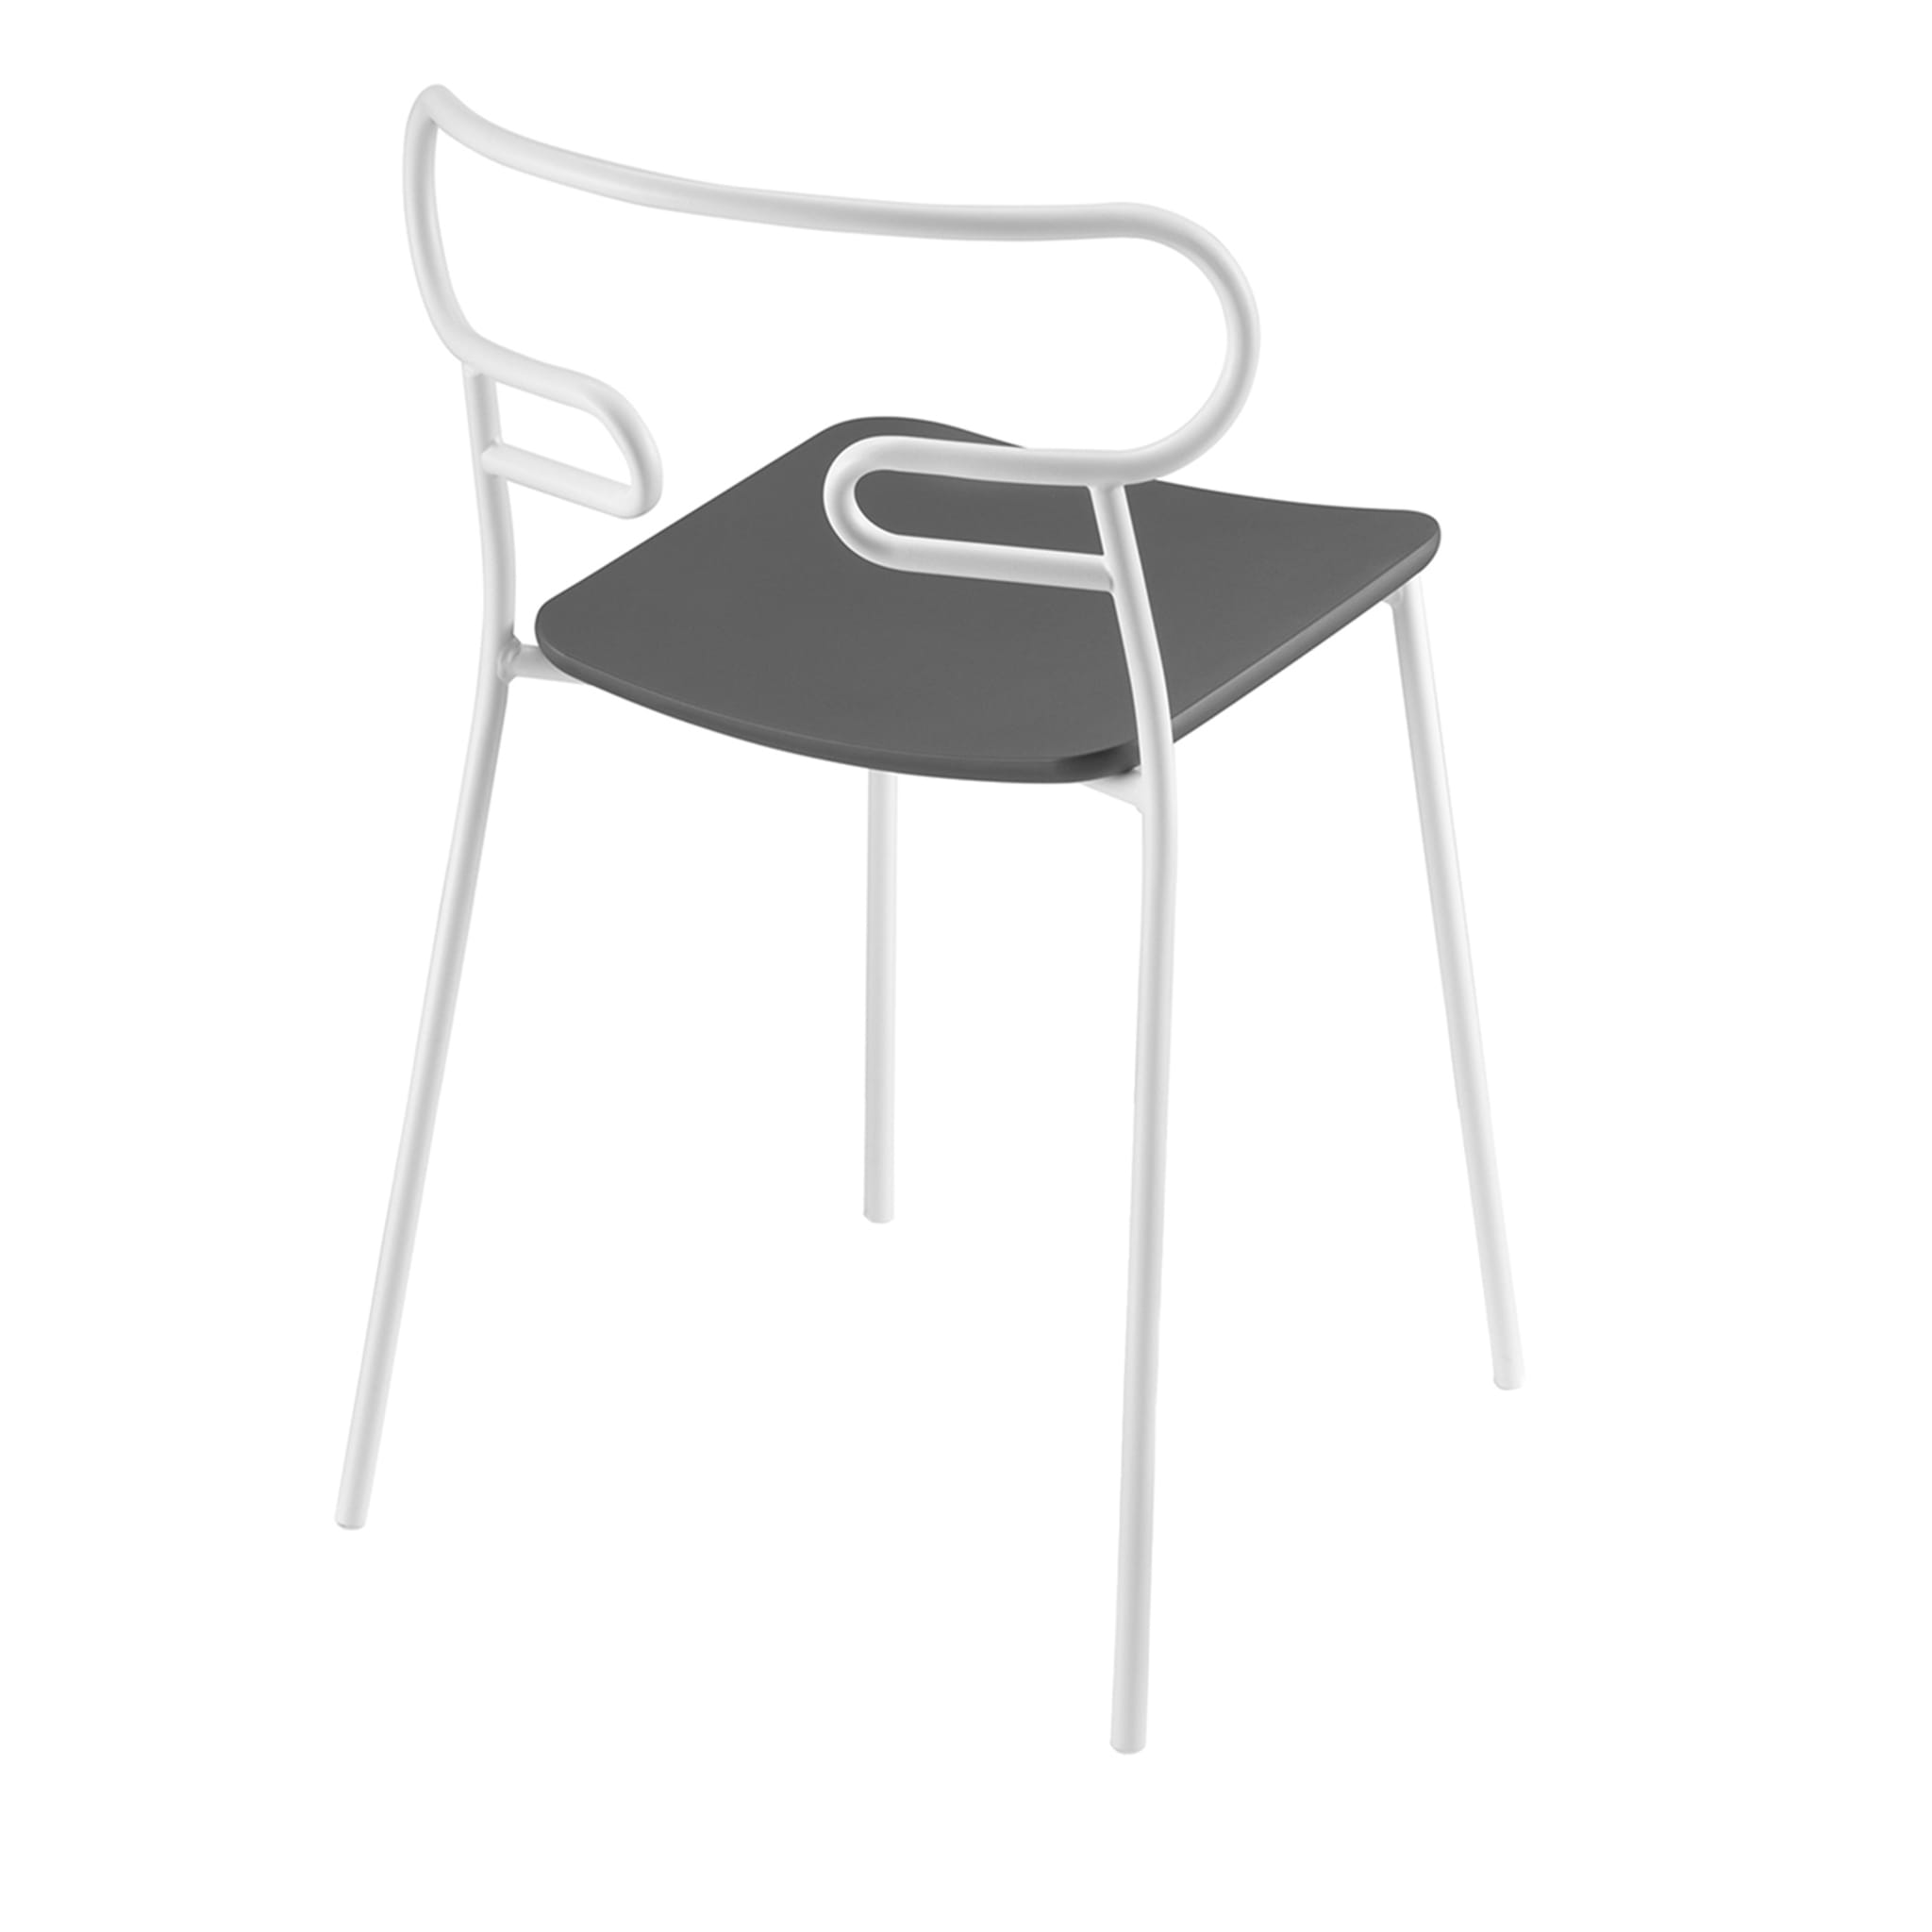 Genoa White Chair #2 by Cesare Ehr - Alternative view 1